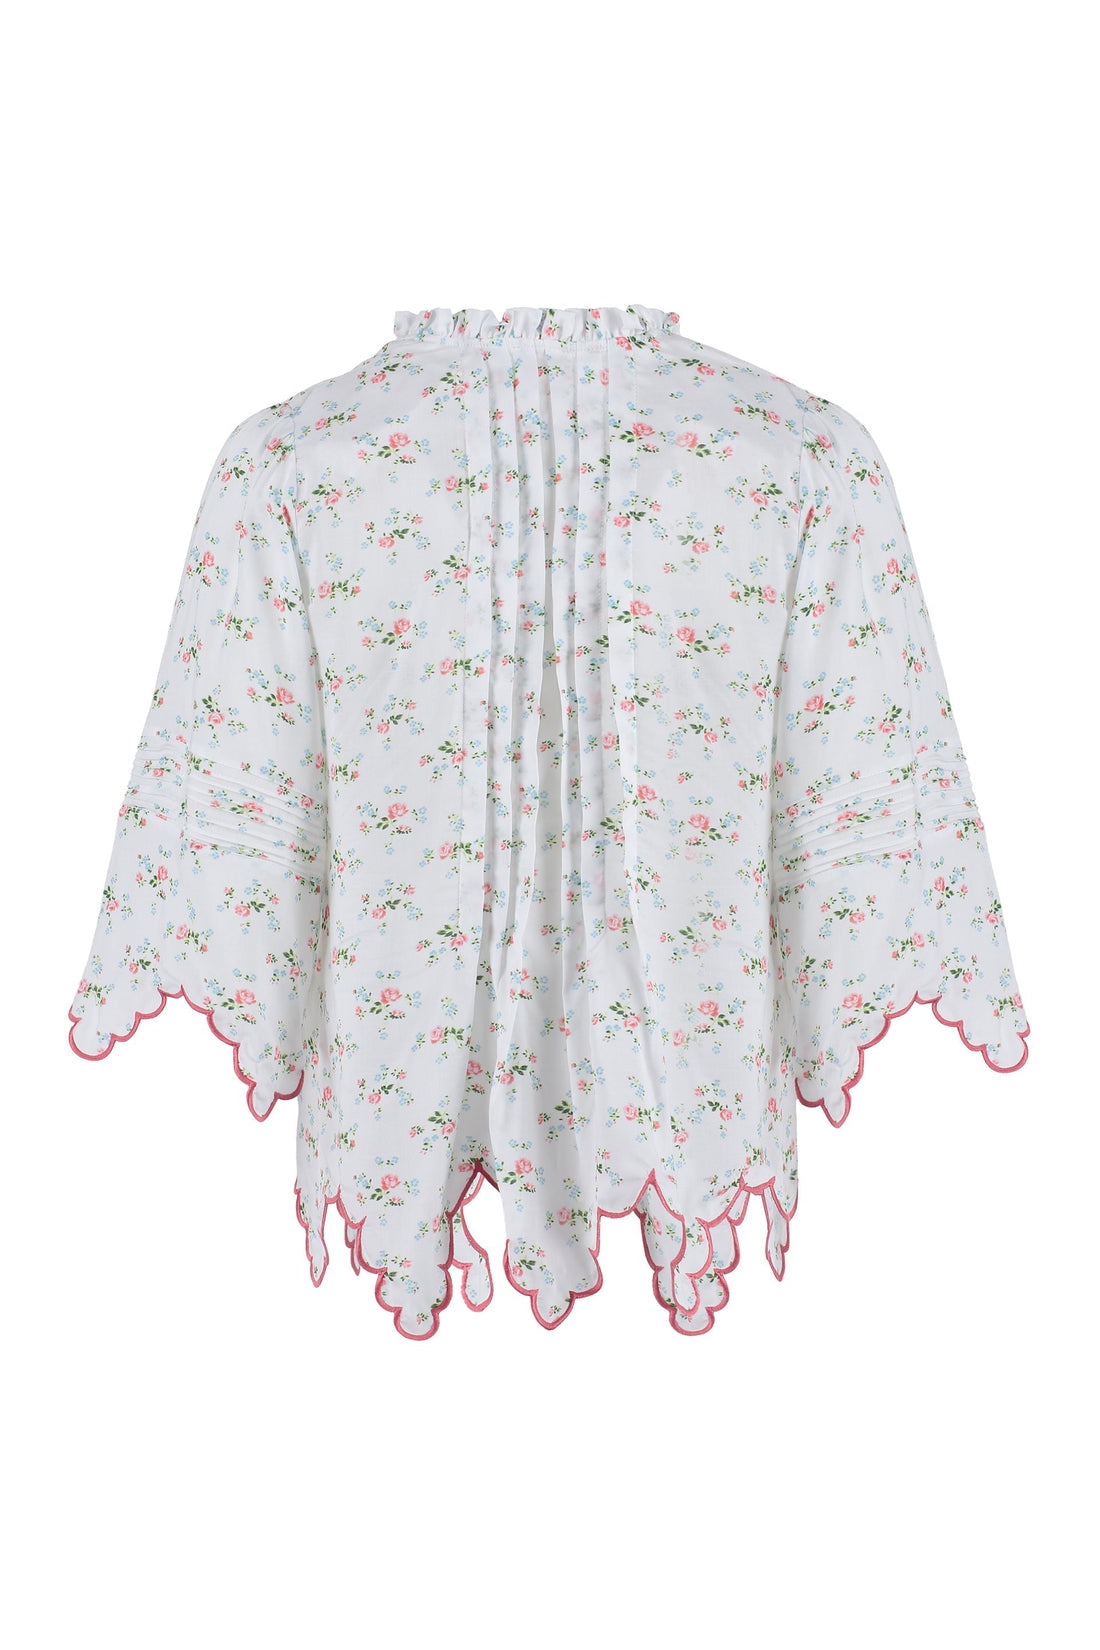 Loretta Caponi-OUTLET-SALE-Matilde printed frill blouse-ARCHIVIST